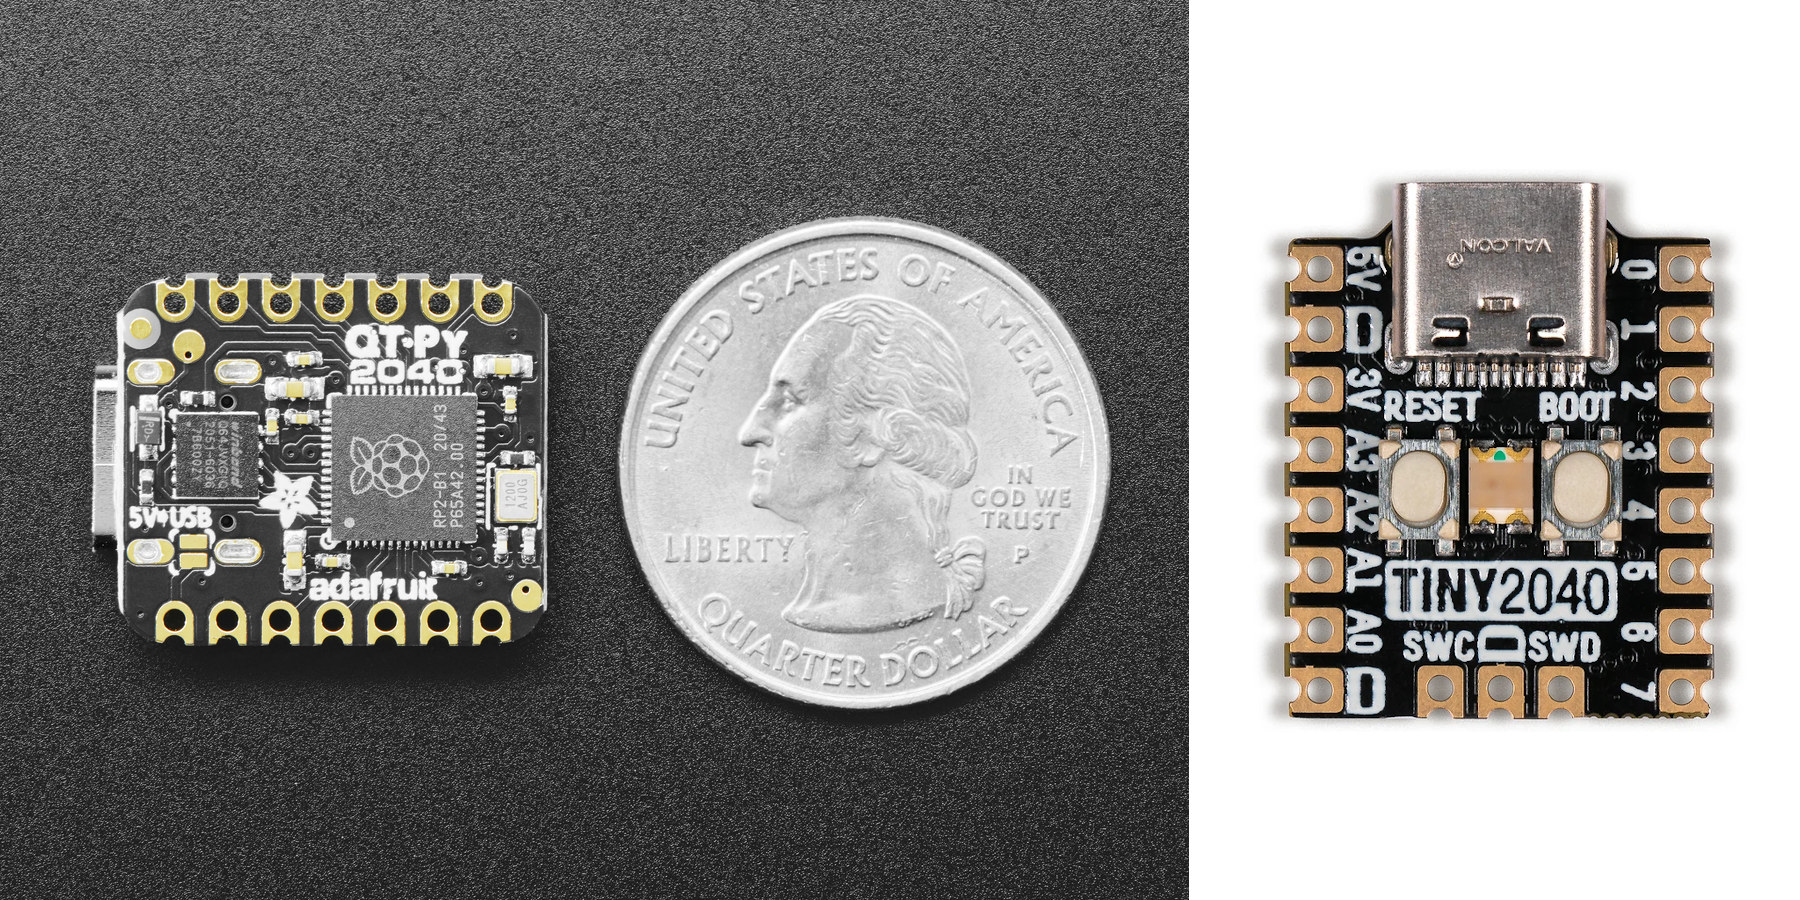 The Tiniest Raspberry Pi RP2040 Boards - Tiny 2040 & Adafruit QT